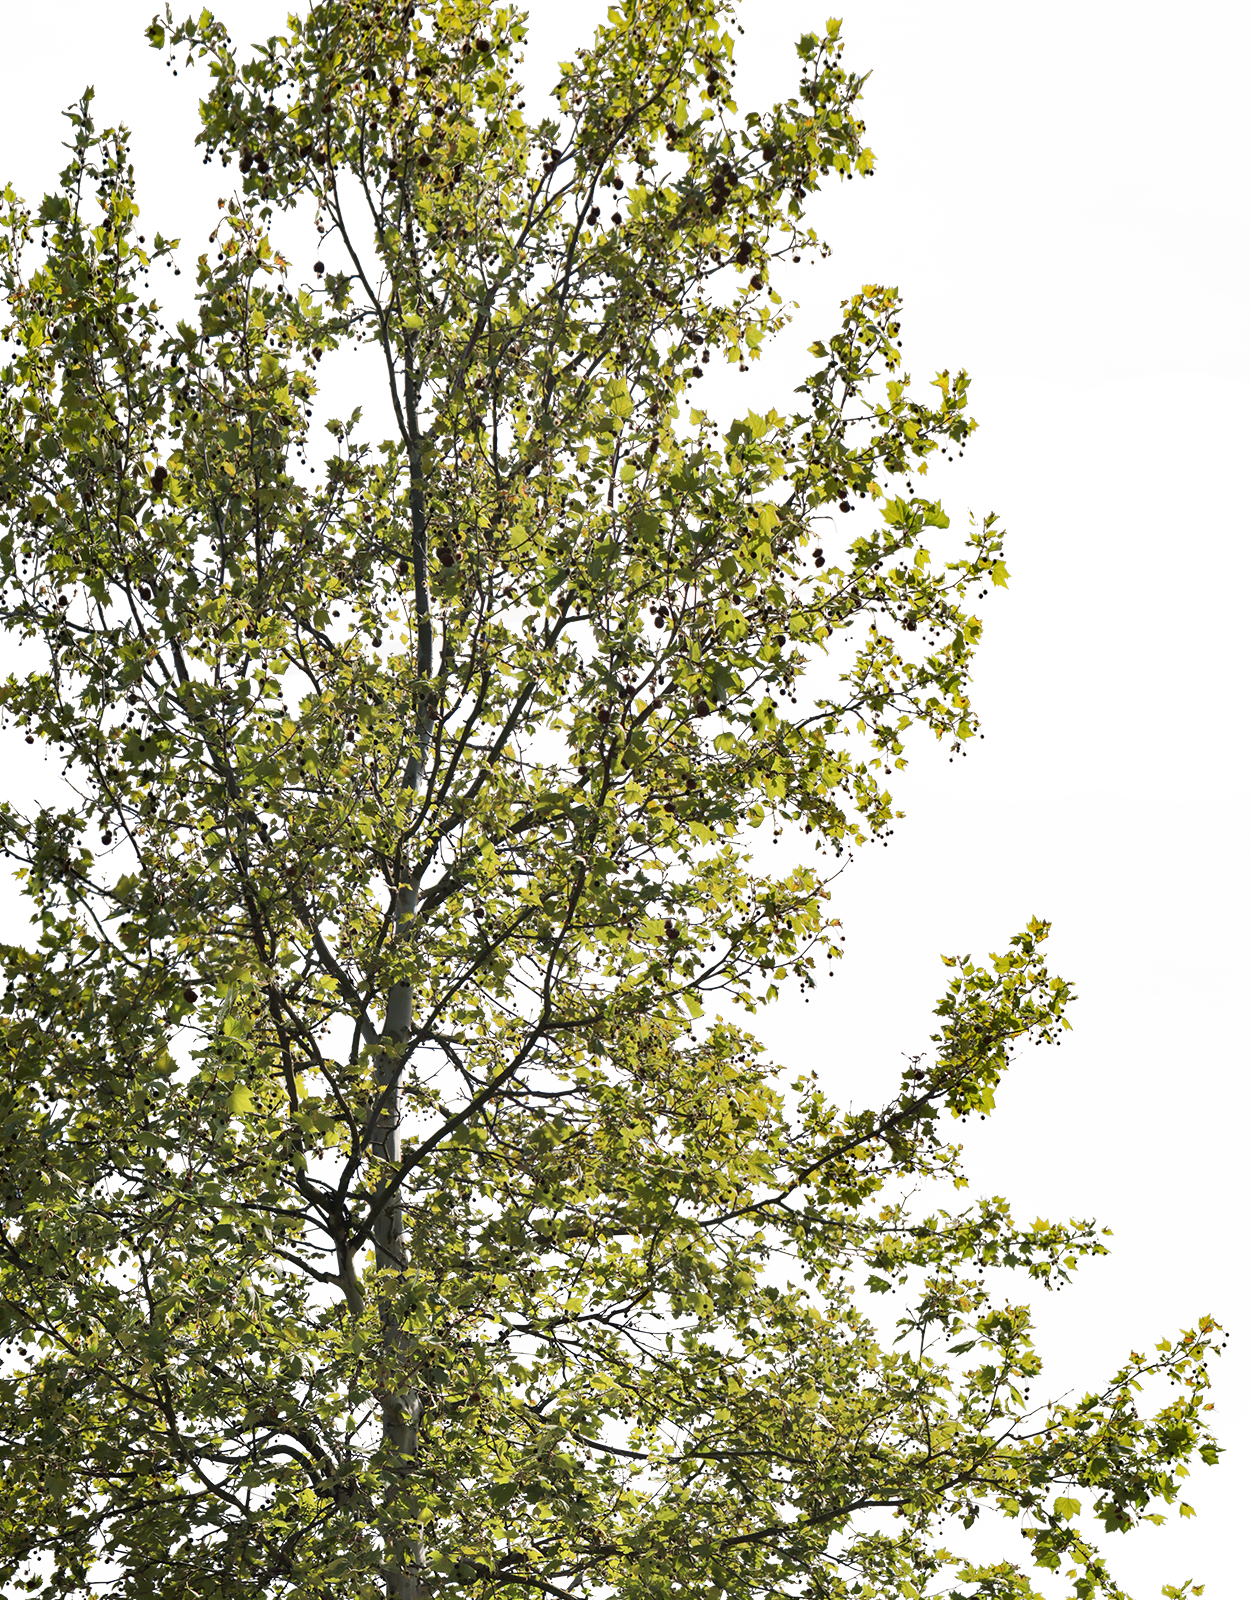 Platanus acerifolia m11 - cutout trees